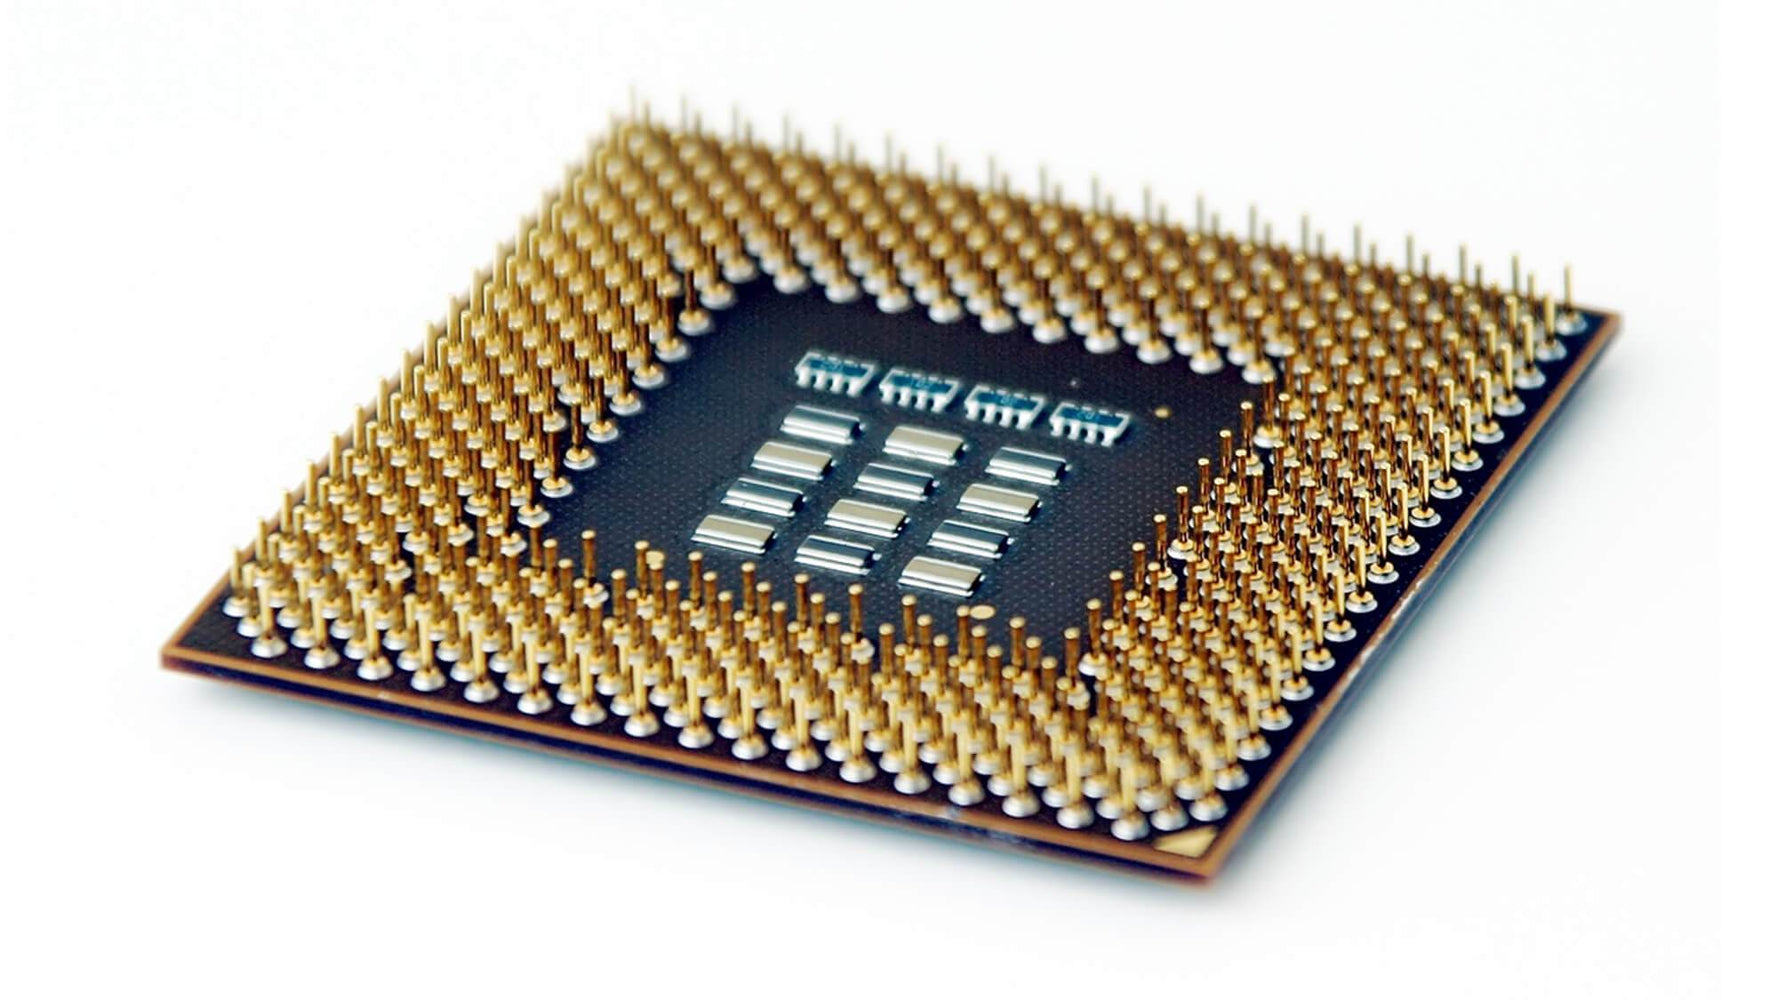 X5160 - Sun 2.13GHz 5.86GT/s QPI 8MB L3 Cache Intel Xeon L5518 Quad Core Processor